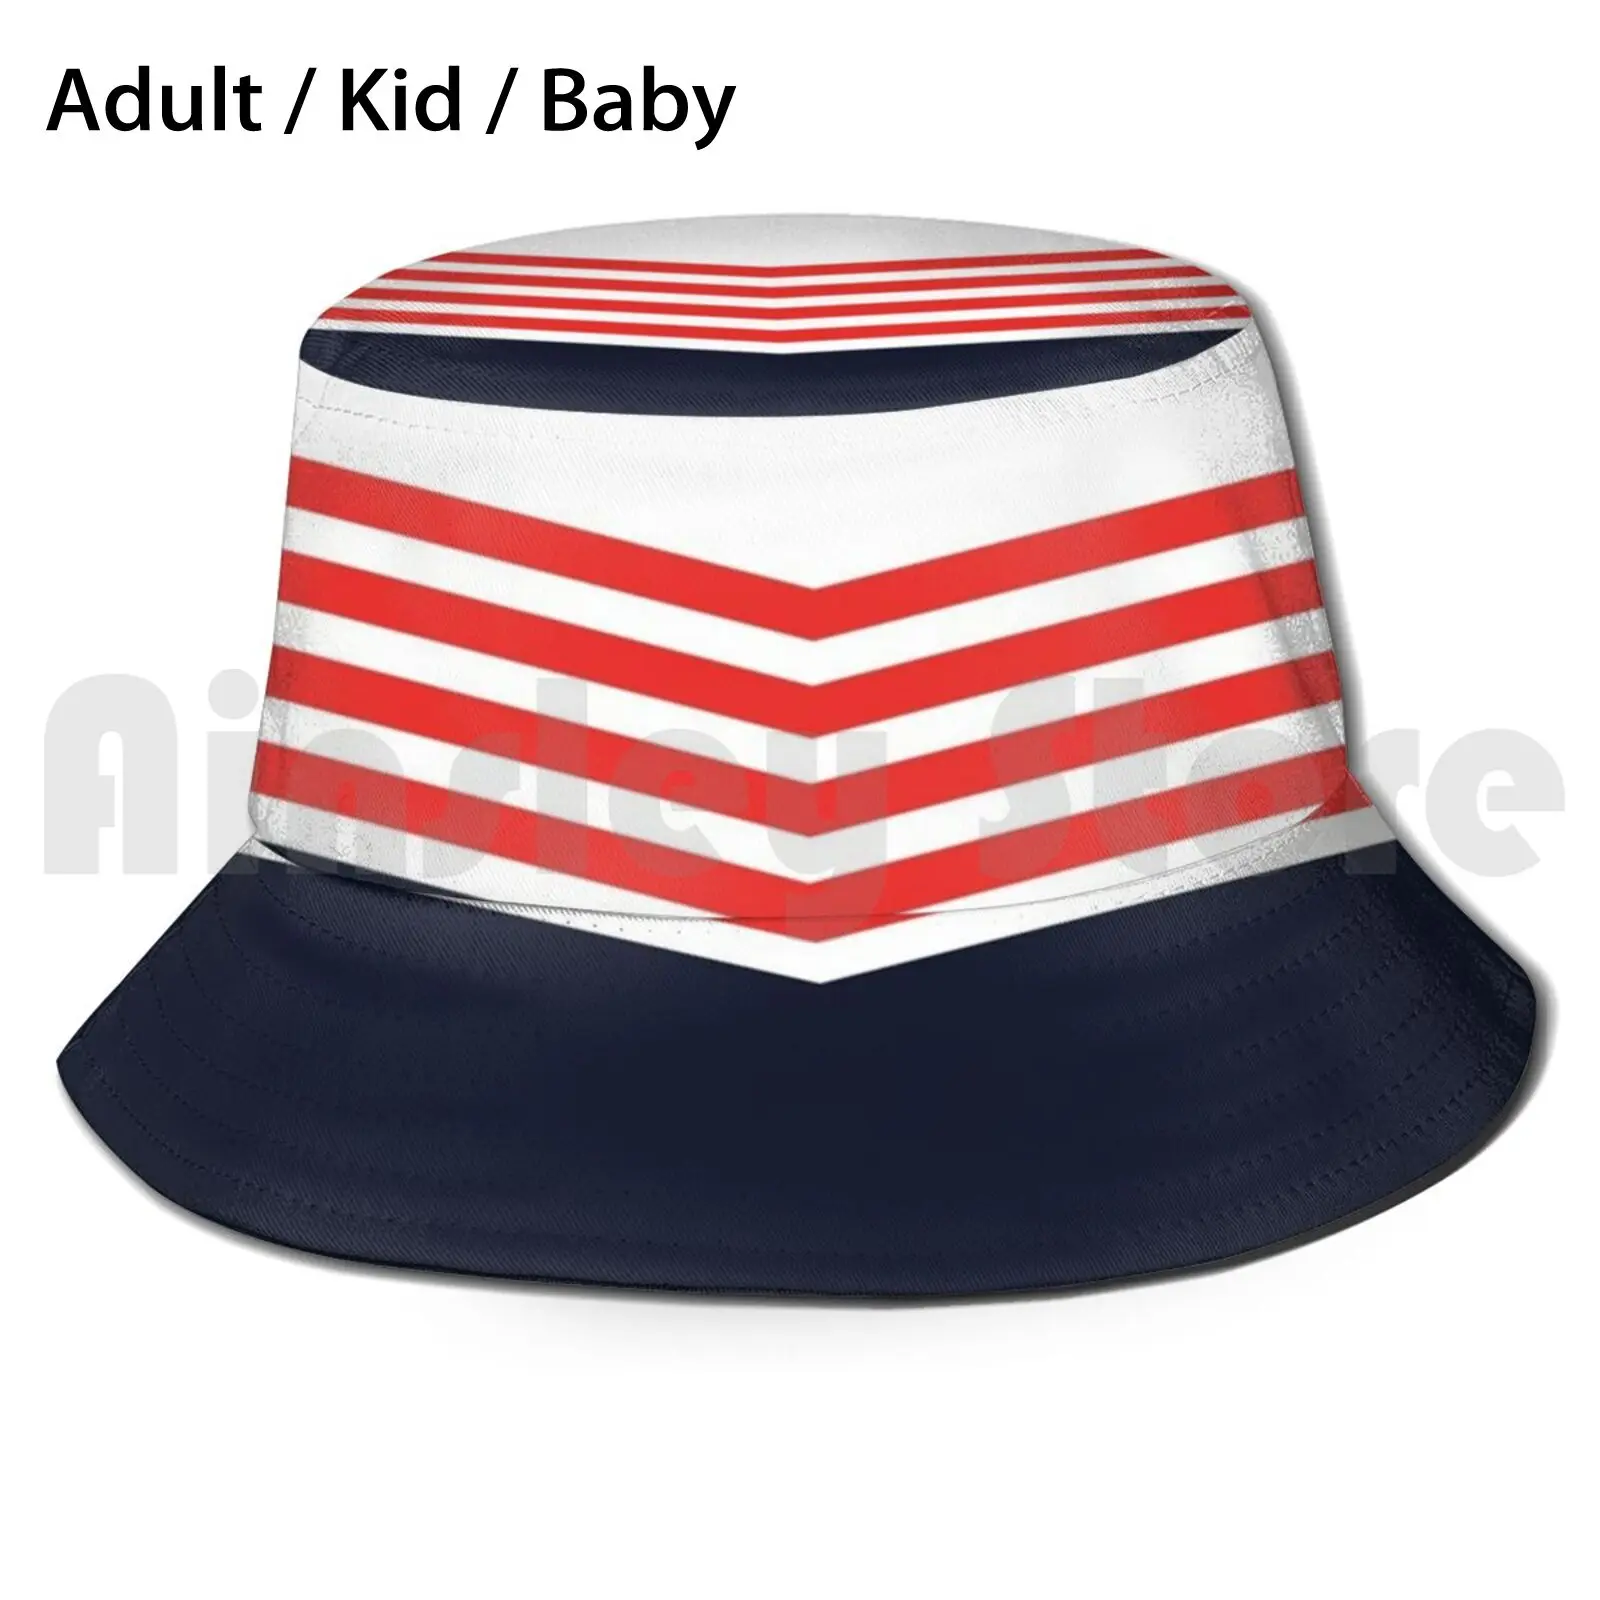 

England 1976 Retro Navy White & Red Bucket Hat Adult kid baby Beach Sun Hats Football Soccer England Union Jack Fa